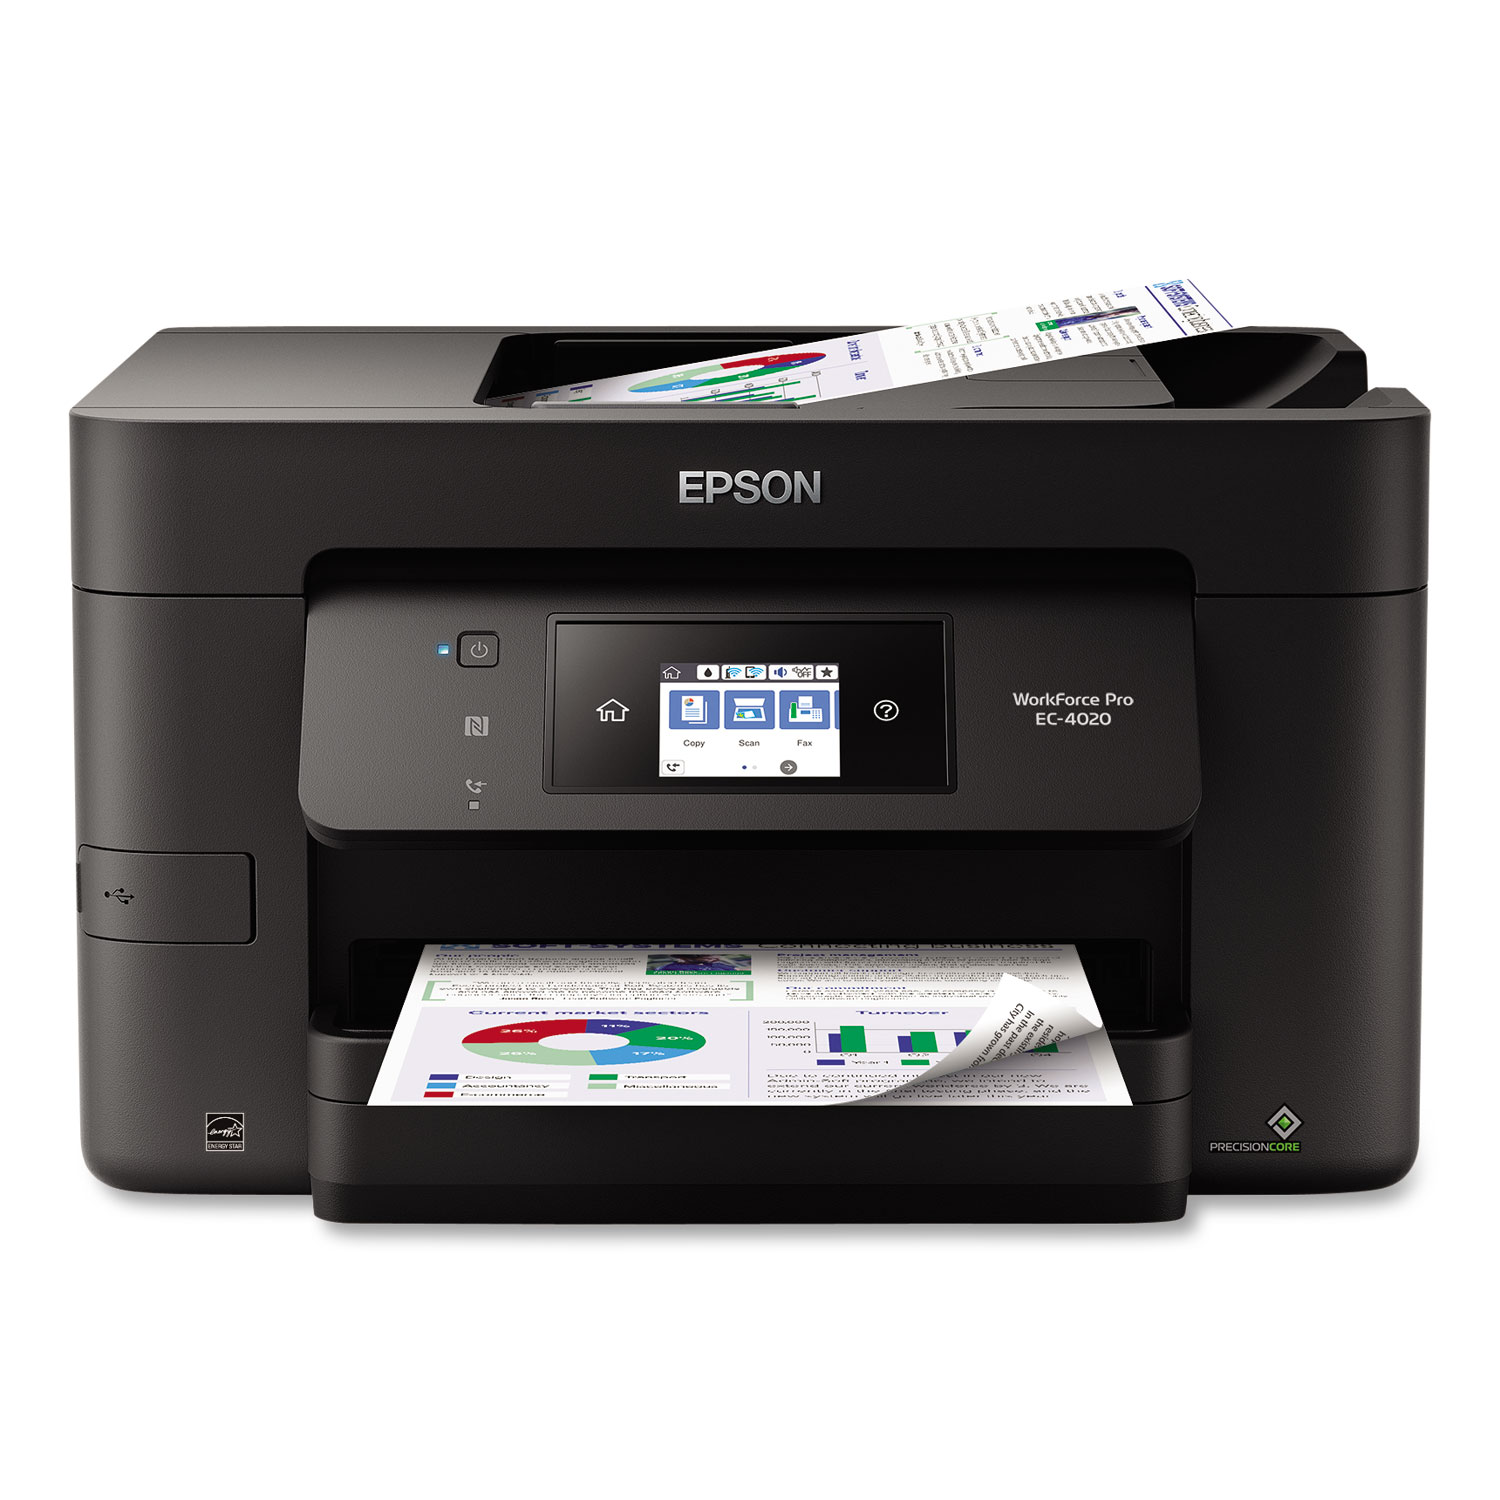  Epson C11CF74203 WorkForce Pro EC-4020 Color Multifunction Printer, Copy/Fax/Print/Scan (EPSC11CF74203) 